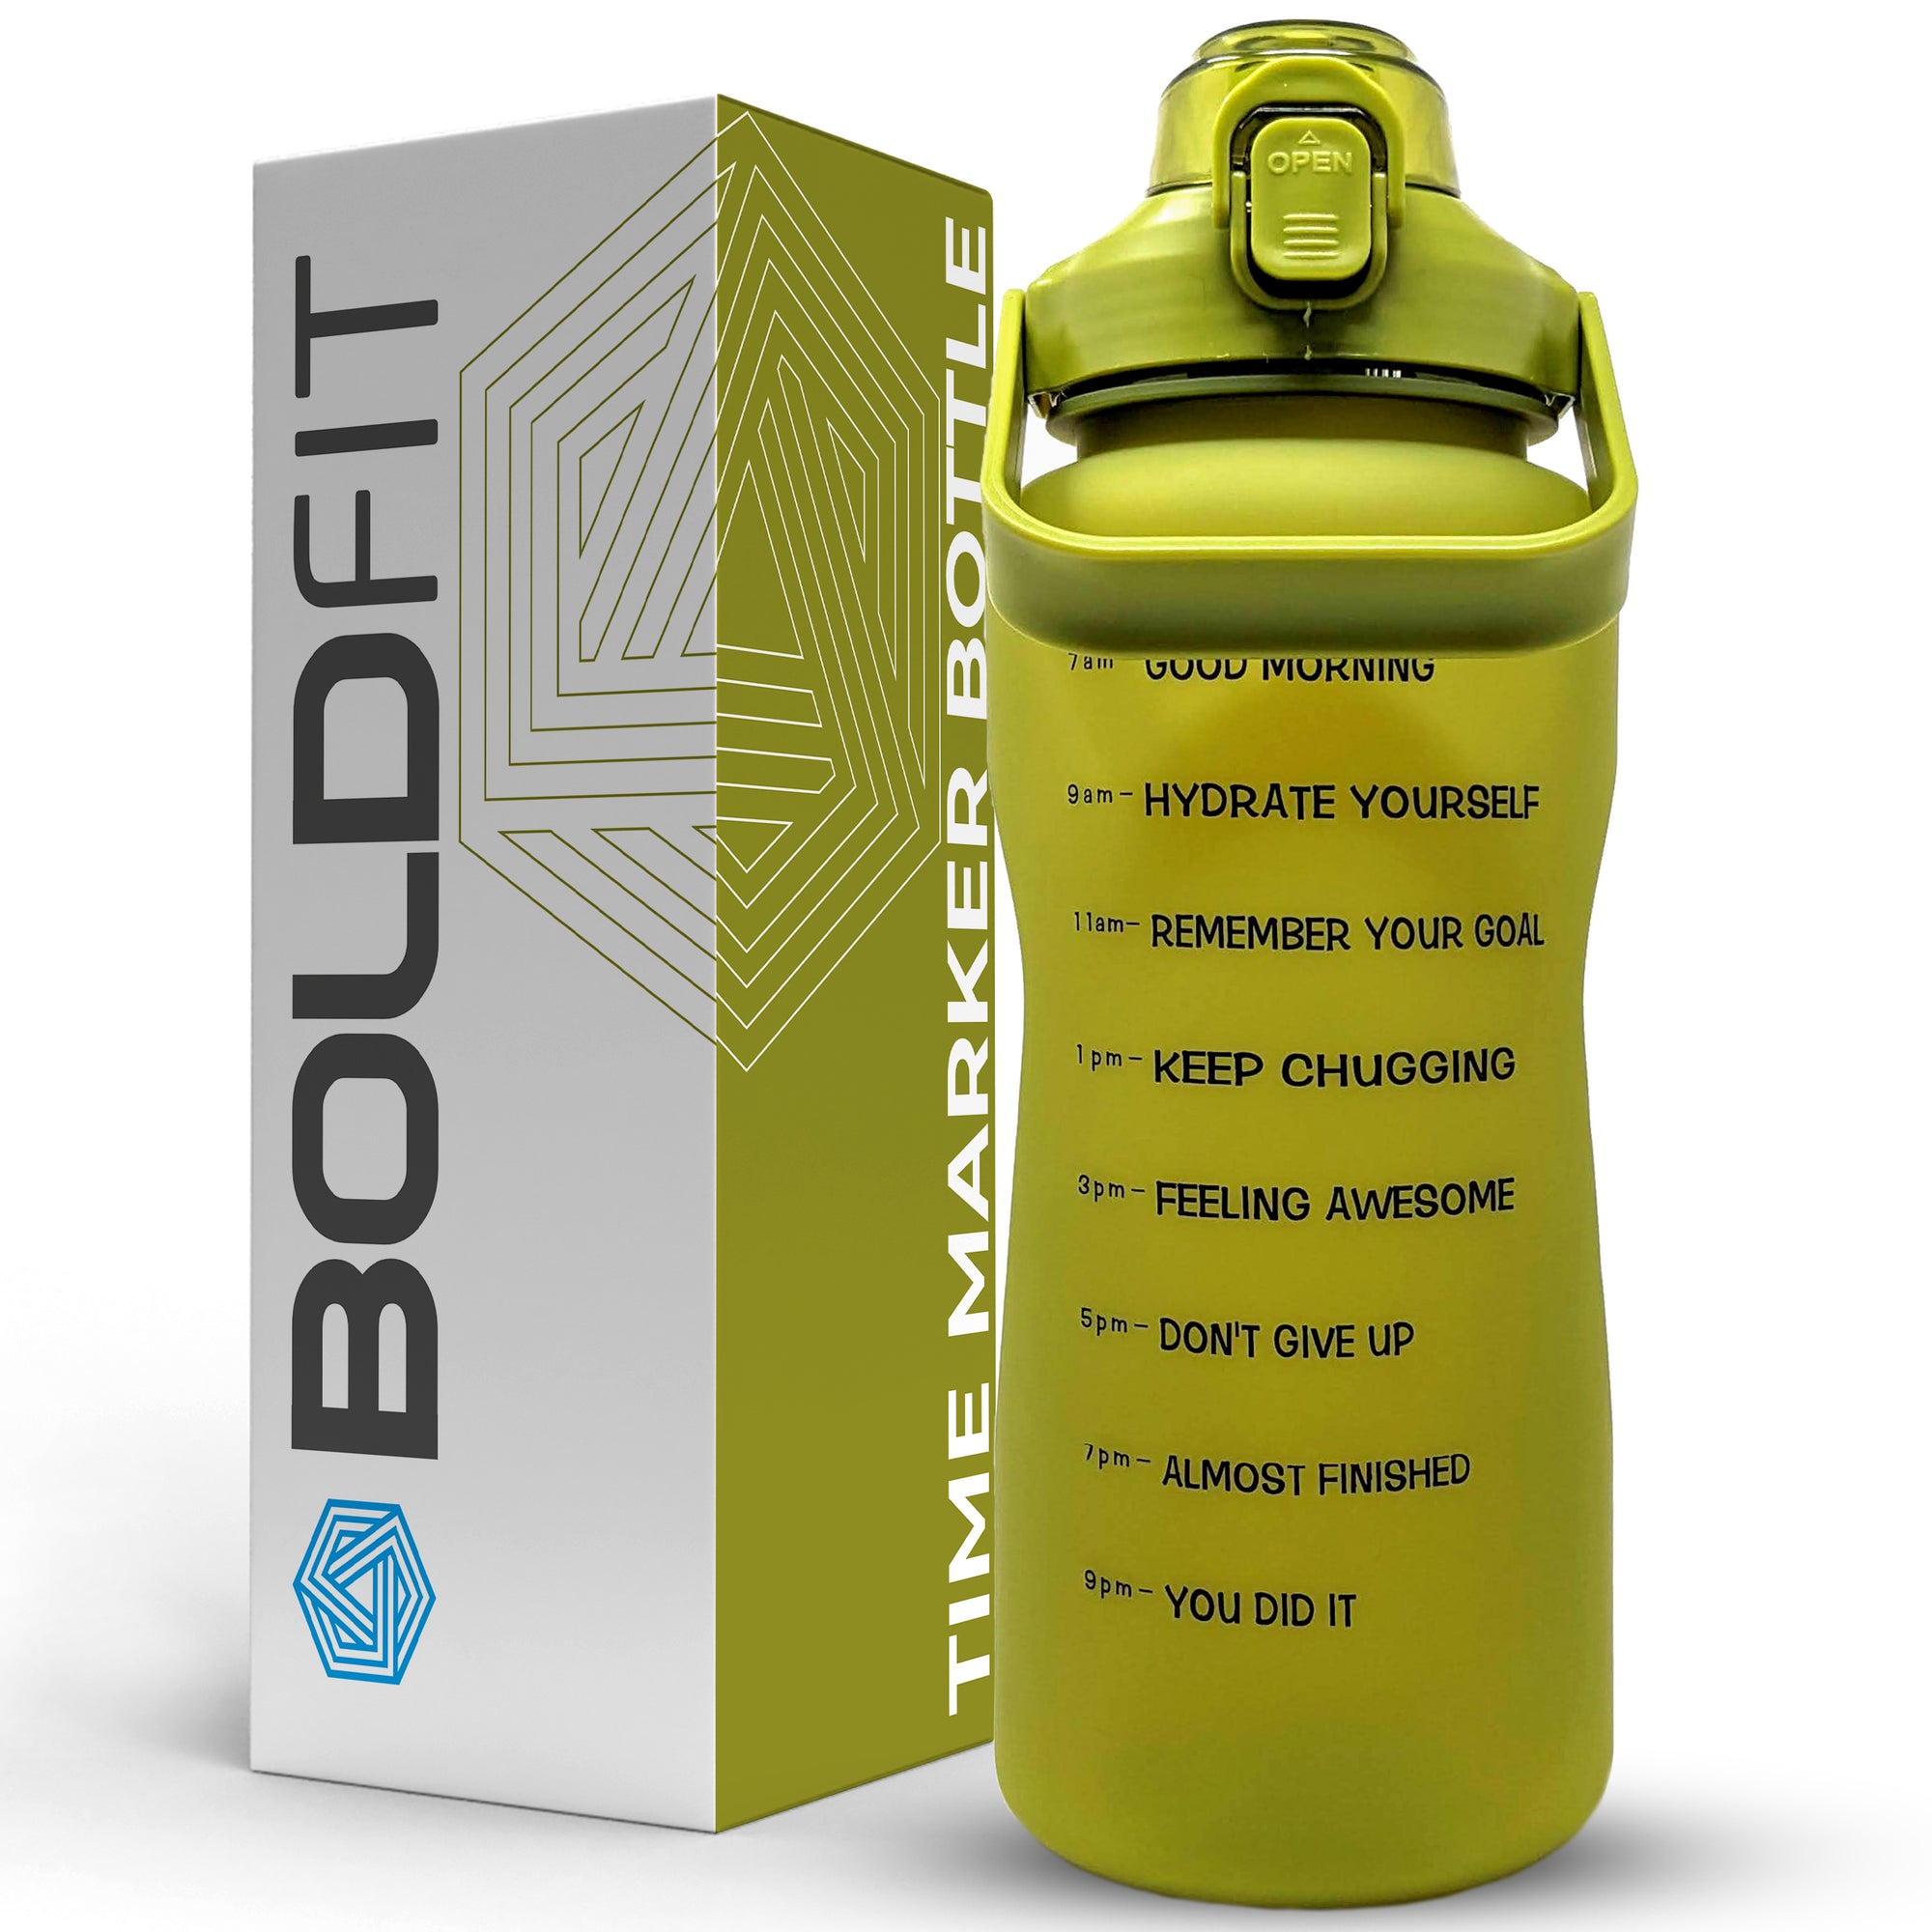 Hulk Gallon Water Bottle 2.2 Litre - BoldFit